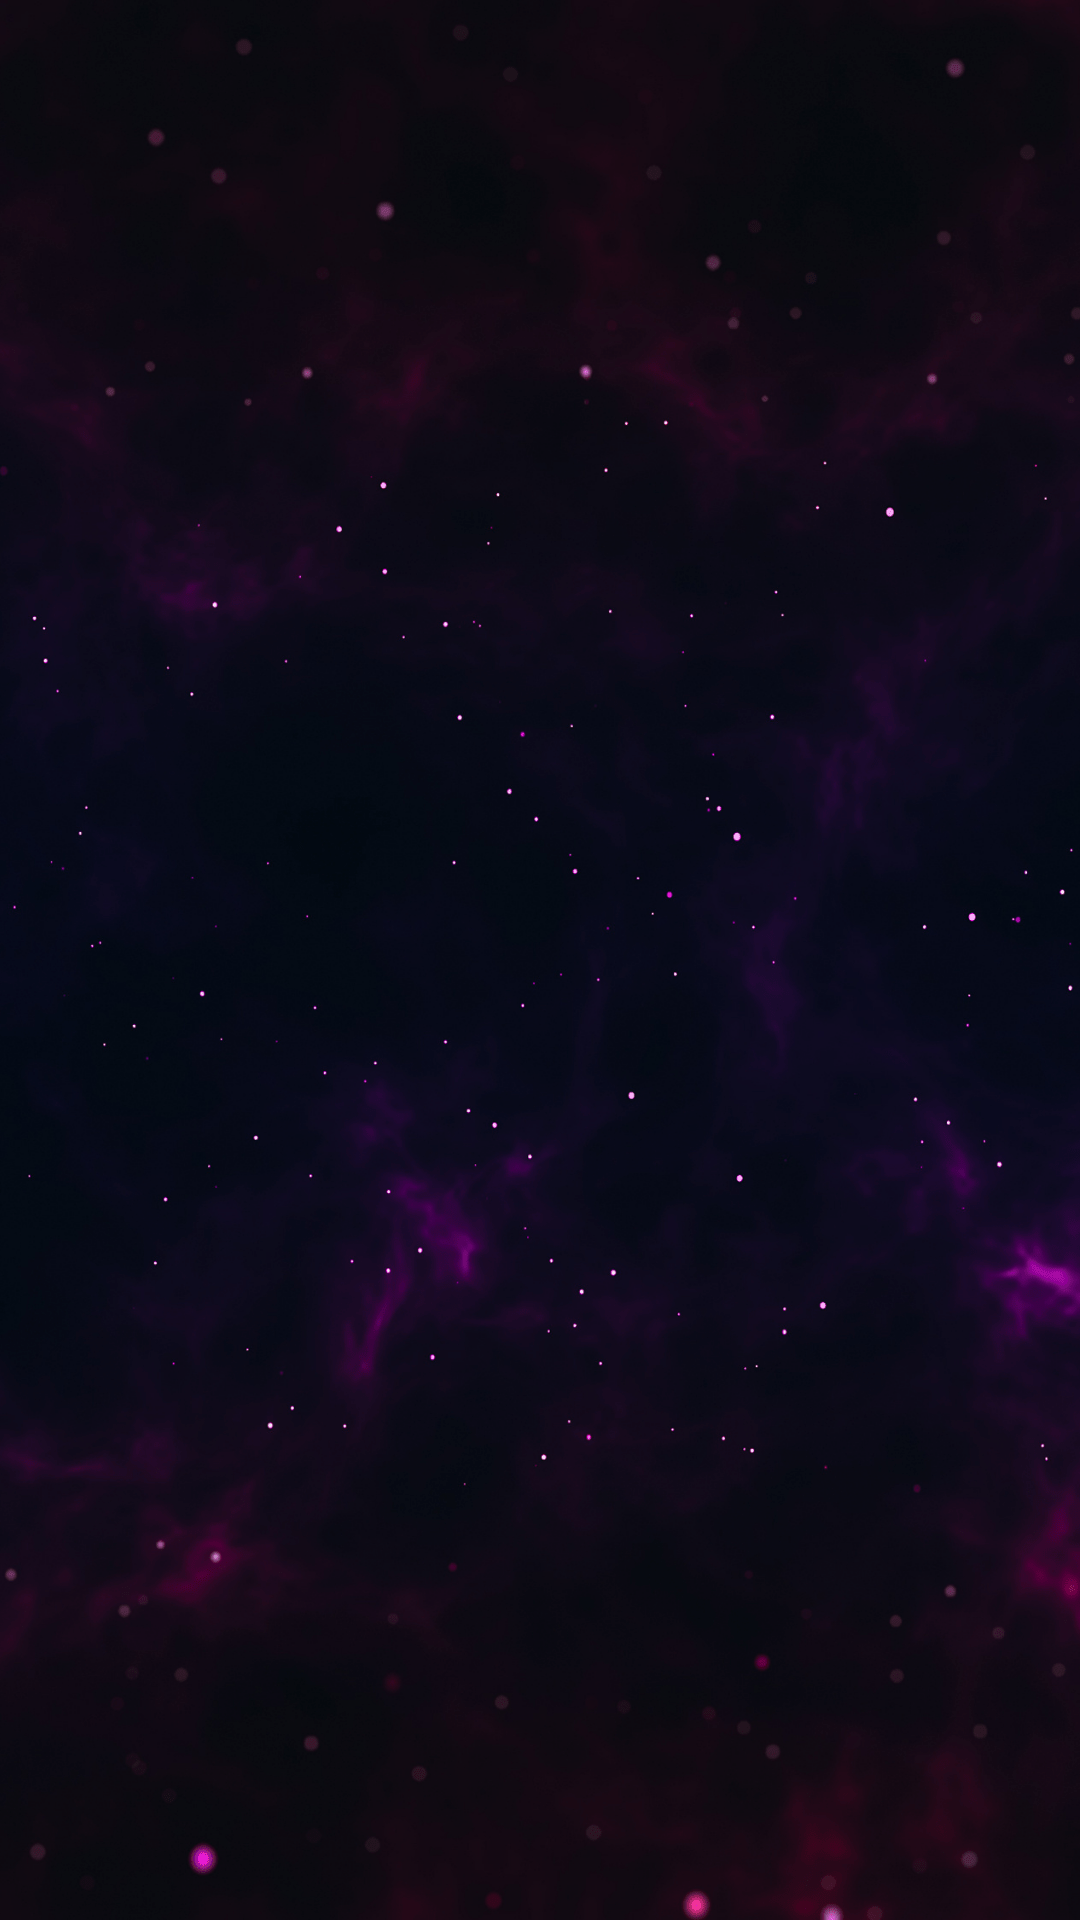 Free Aesthetic Galaxy Wallpaper. Purple galaxy wallpaper, Aesthetic galaxy, Galaxy wallpaper